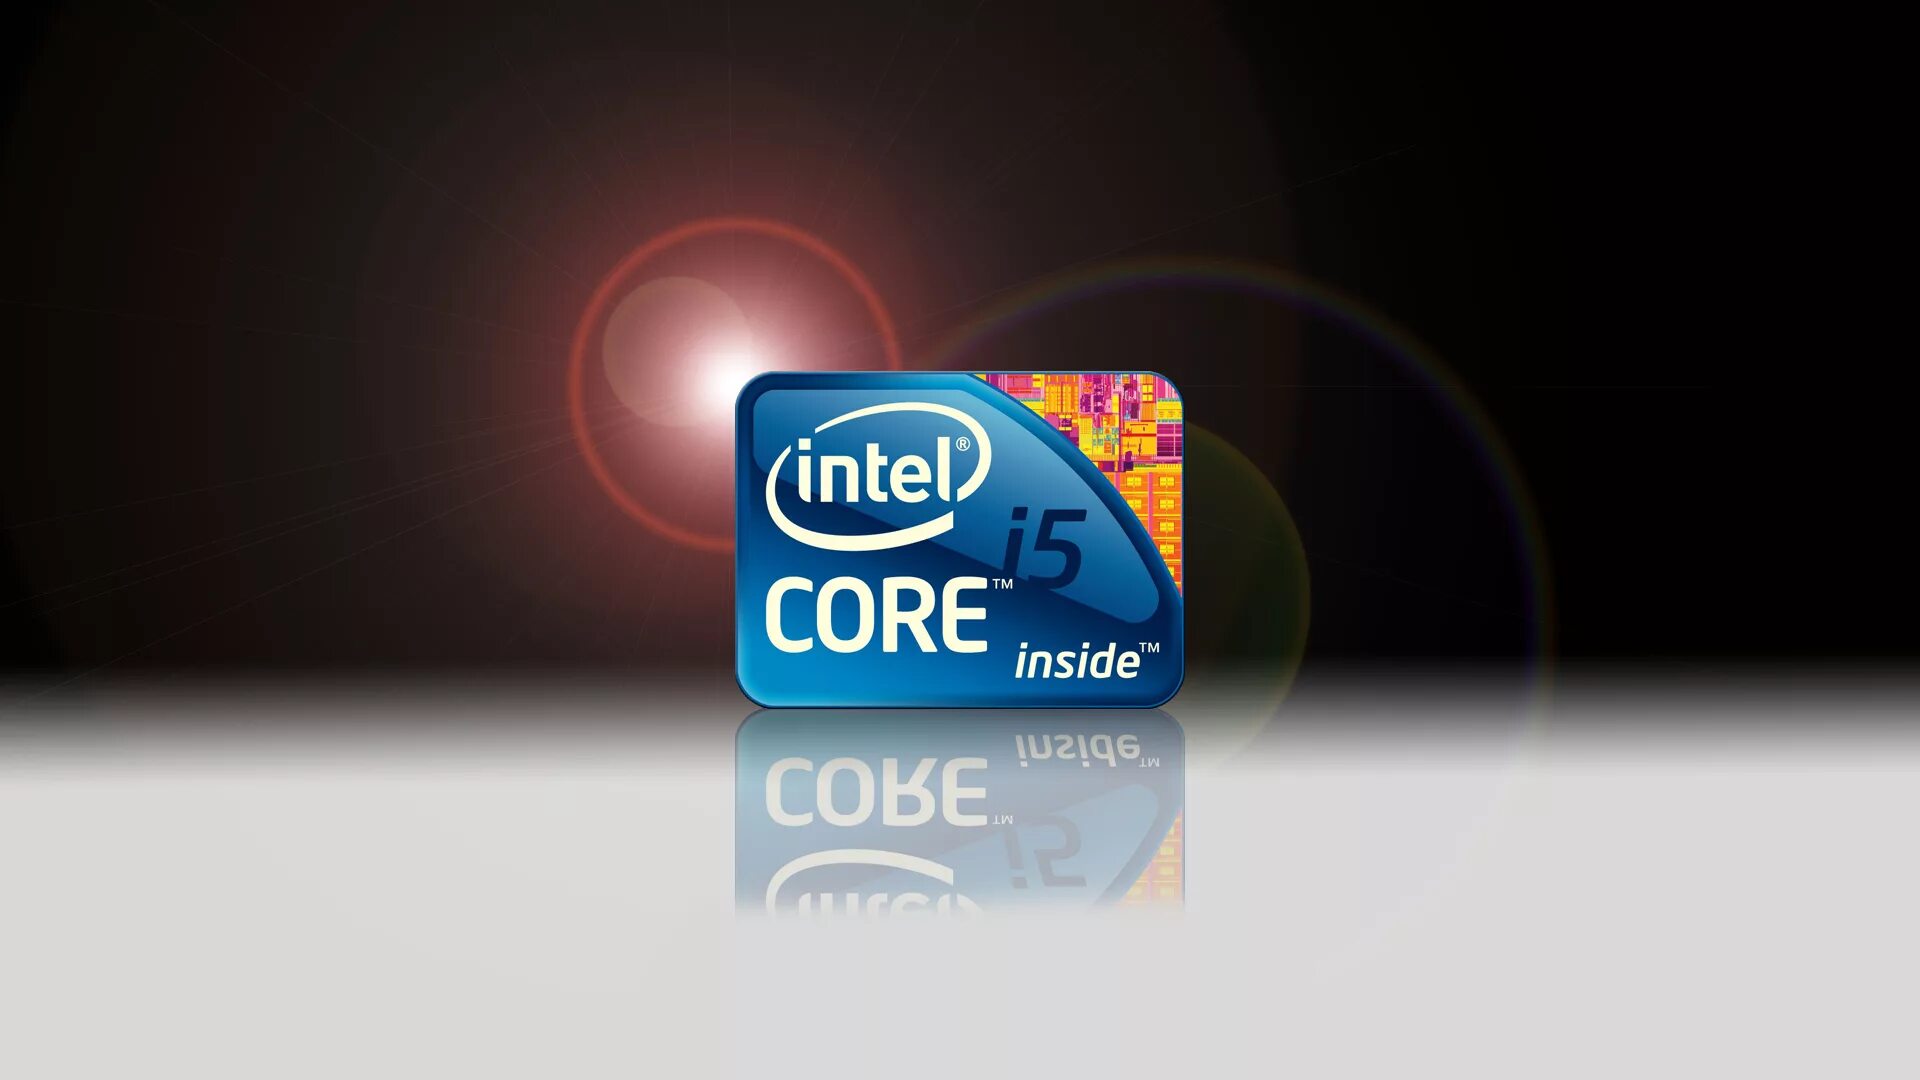 Intel Core i5 logo. Обои Intel Core i5-4590t. Intel Core i5 inside.